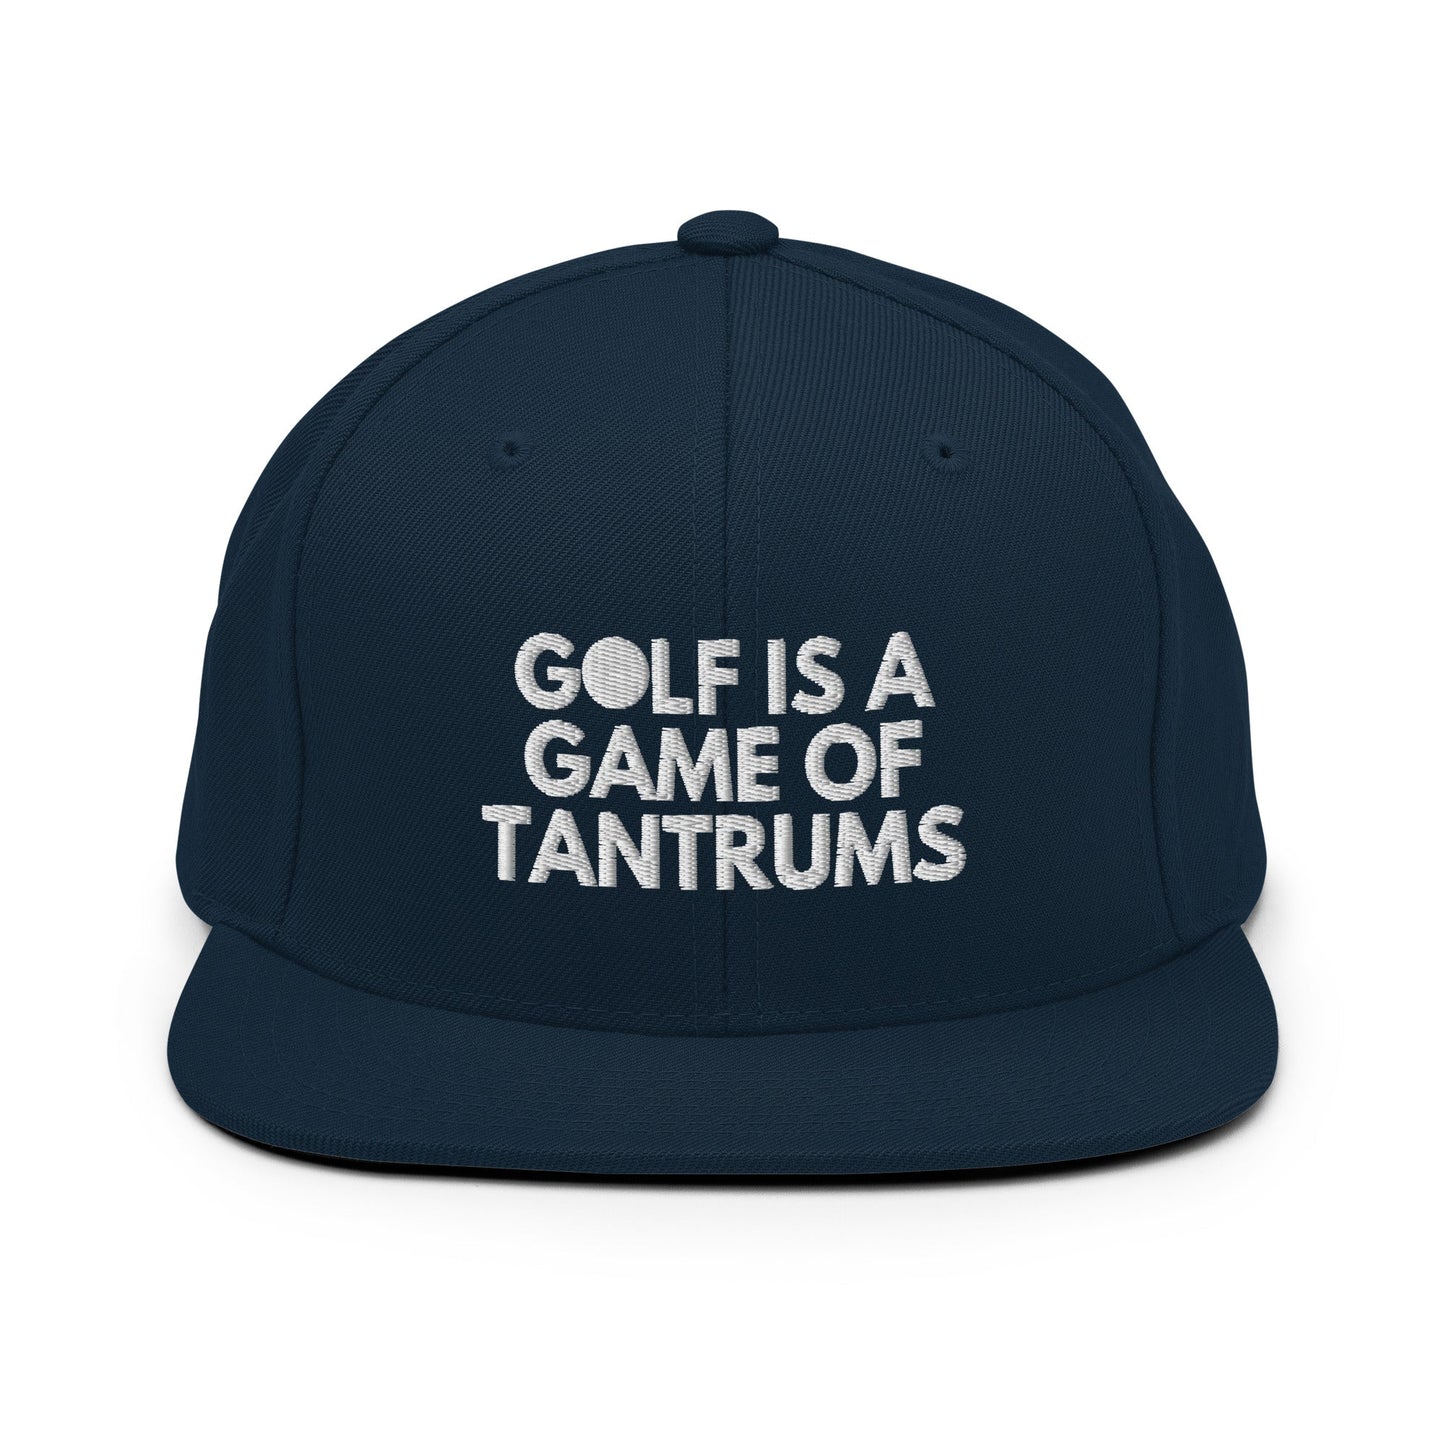 Funny Golfer Gifts  Snapback Hat Dark Navy Golf Is A Game Of Tantrums Hat Snapback Hat